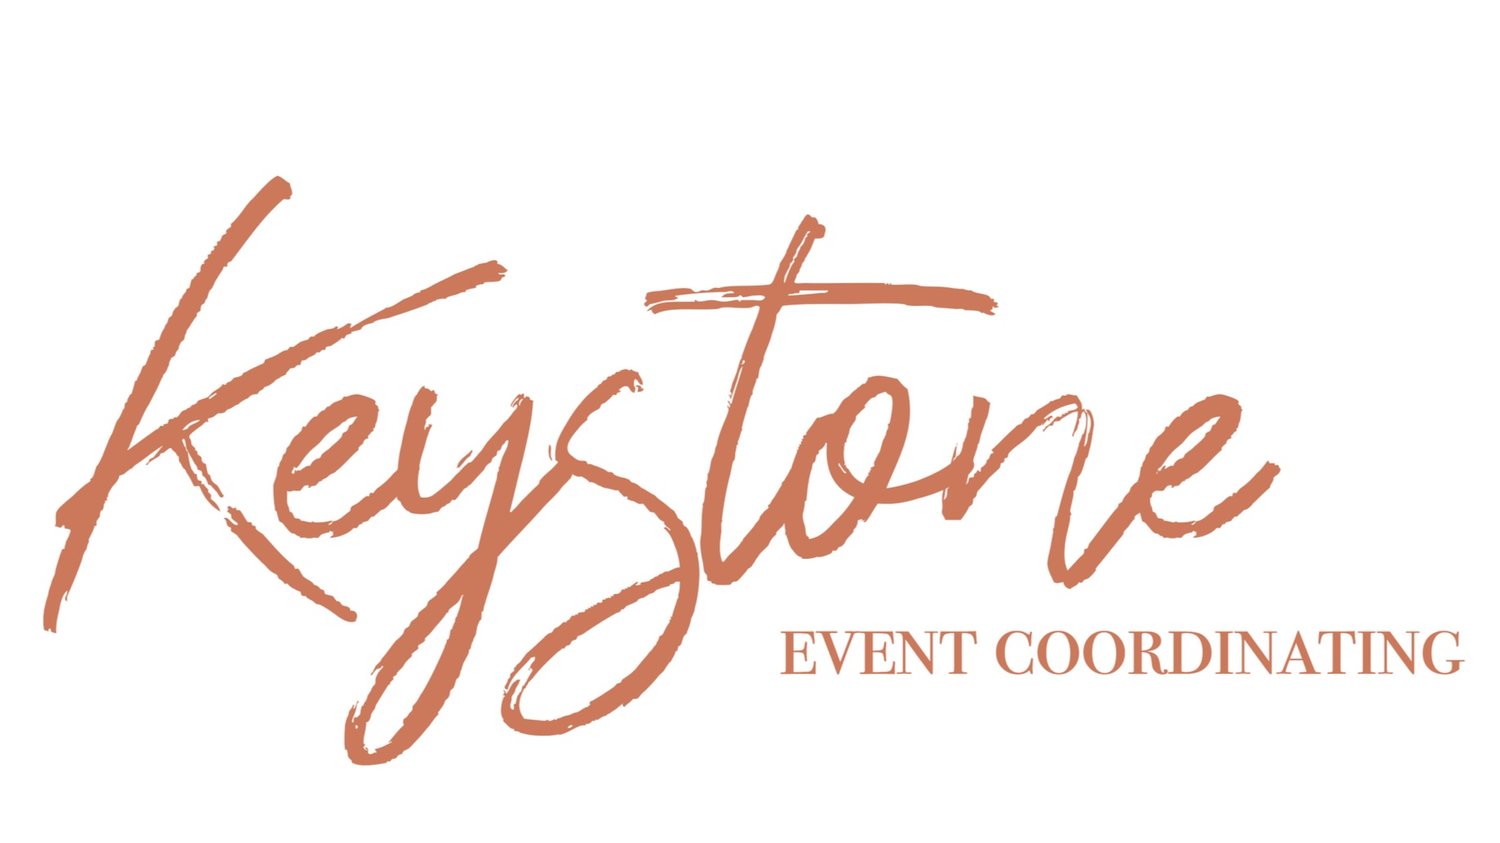 Keystone Event Coordinating